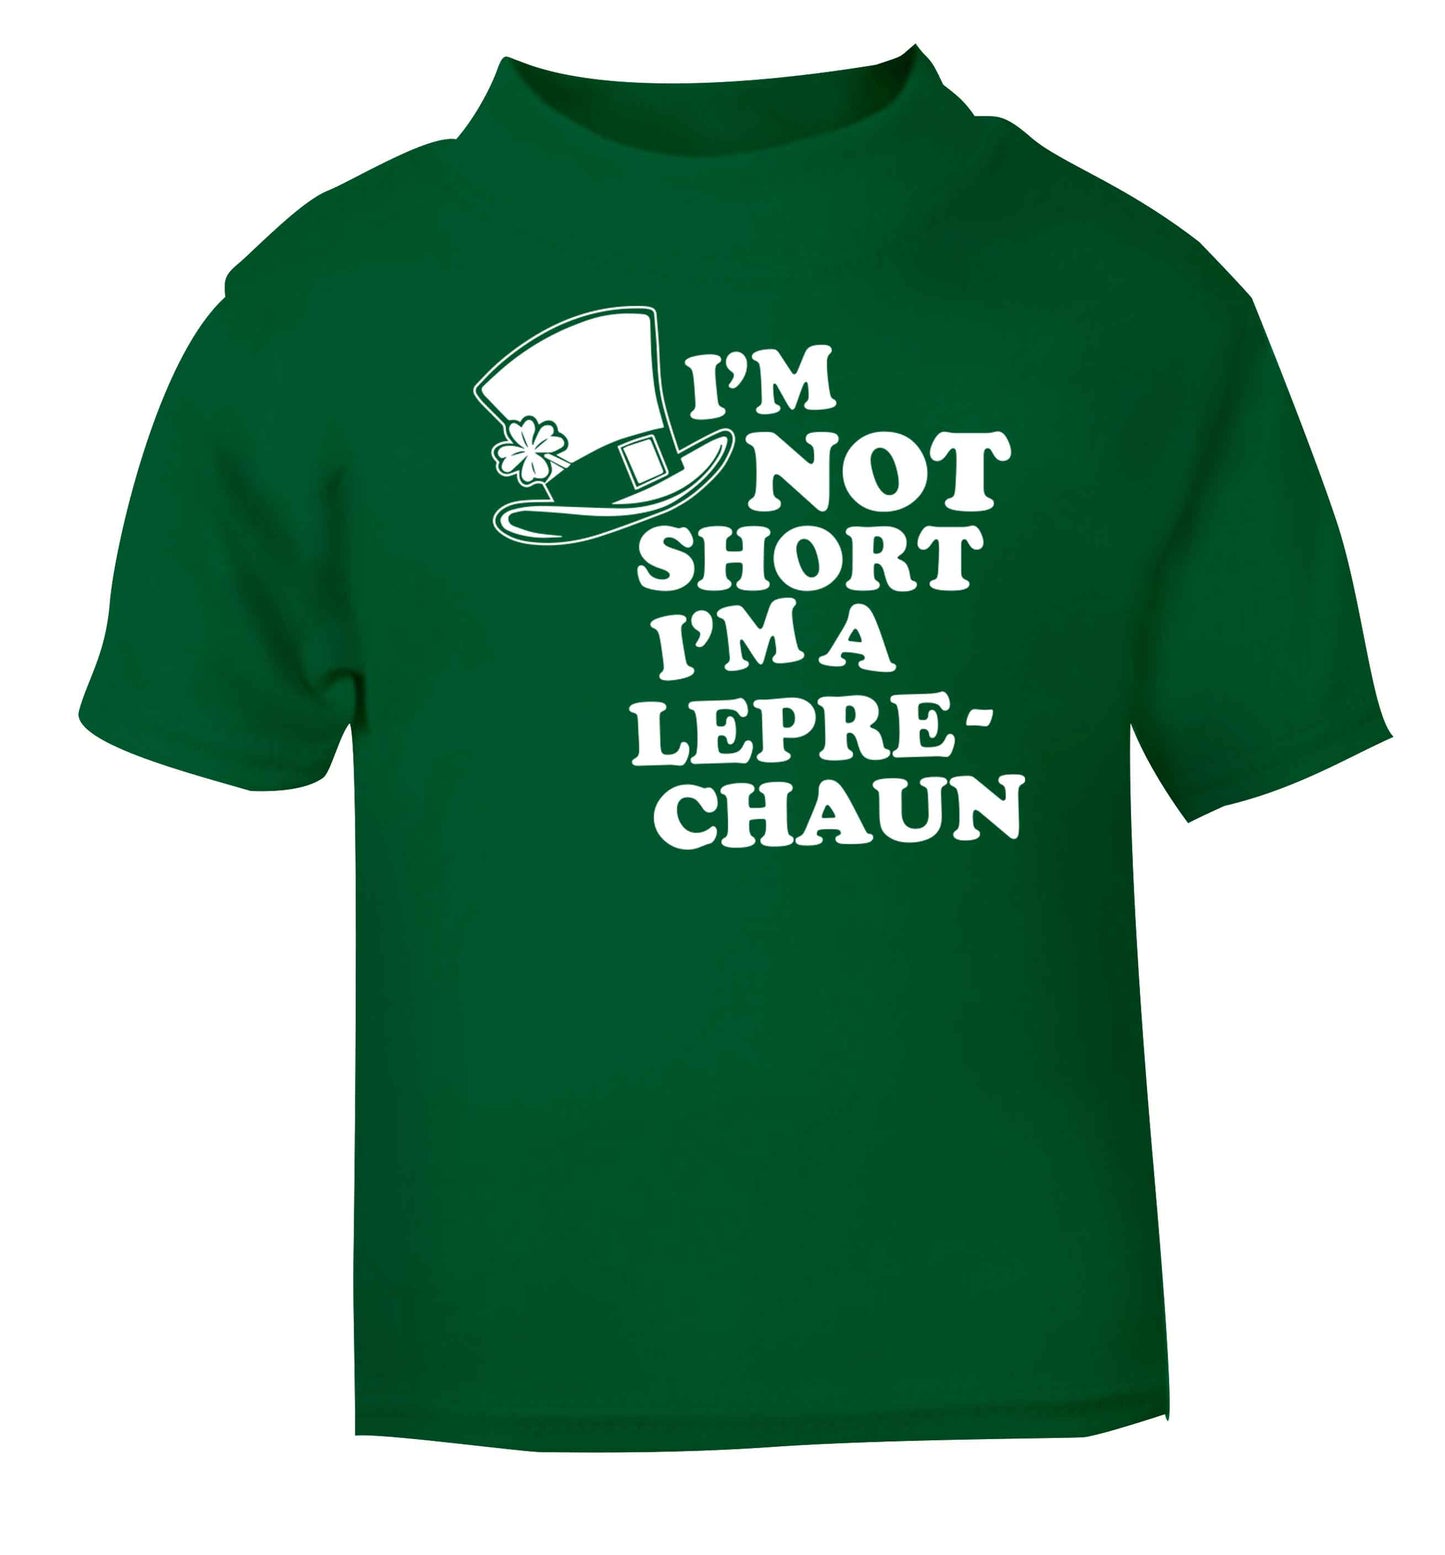 I'm not short I'm a leprechaun green baby toddler Tshirt 2 Years